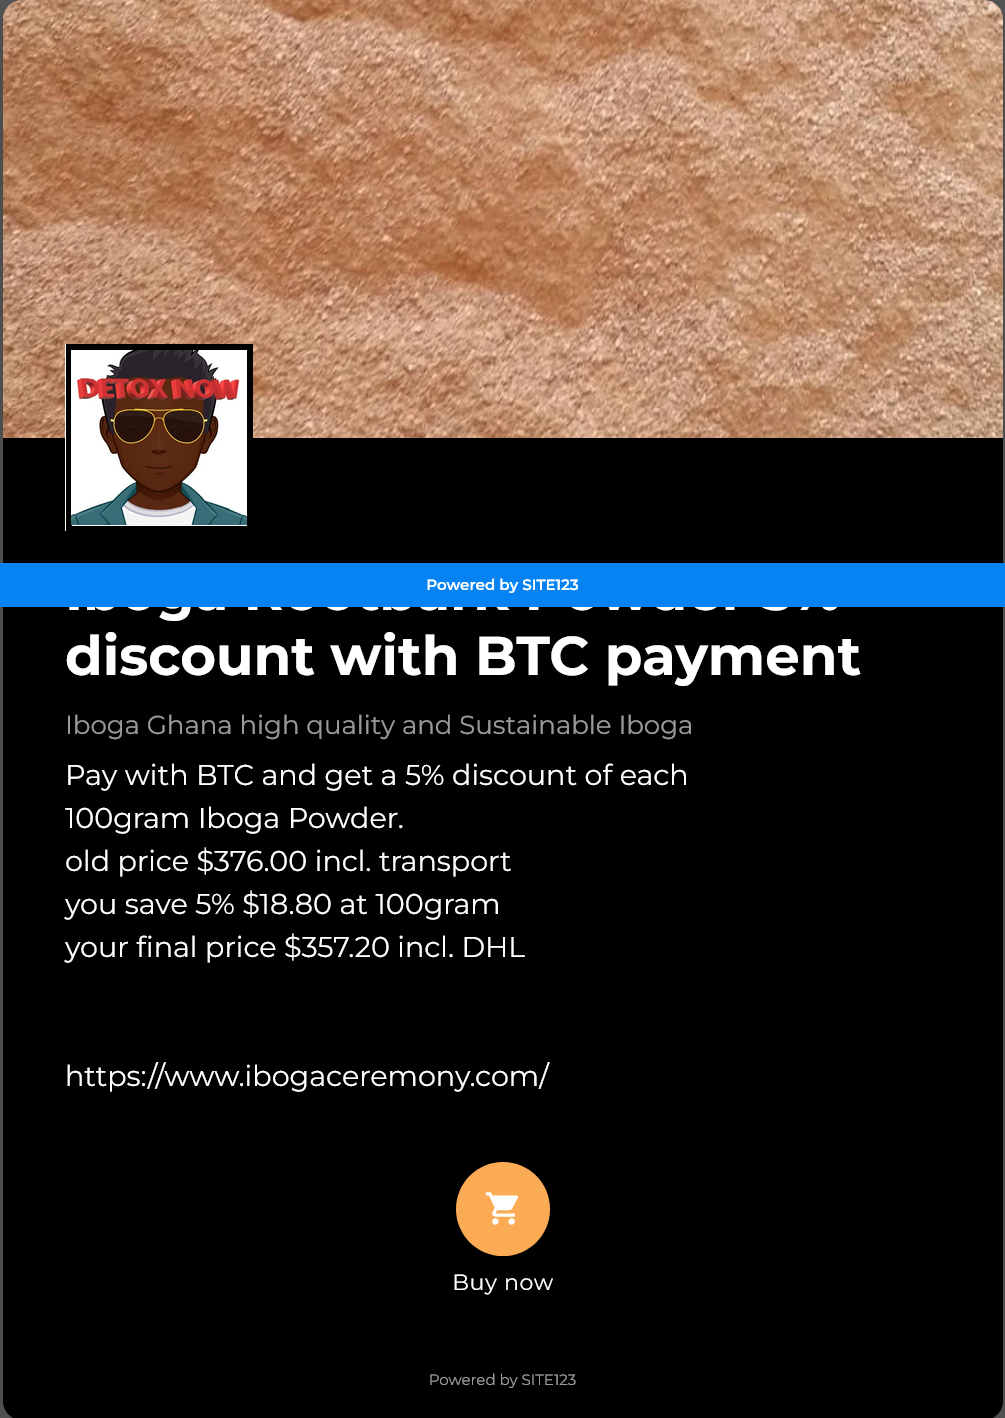 Iboga Rootbark Powder 5% discount with BTC payment